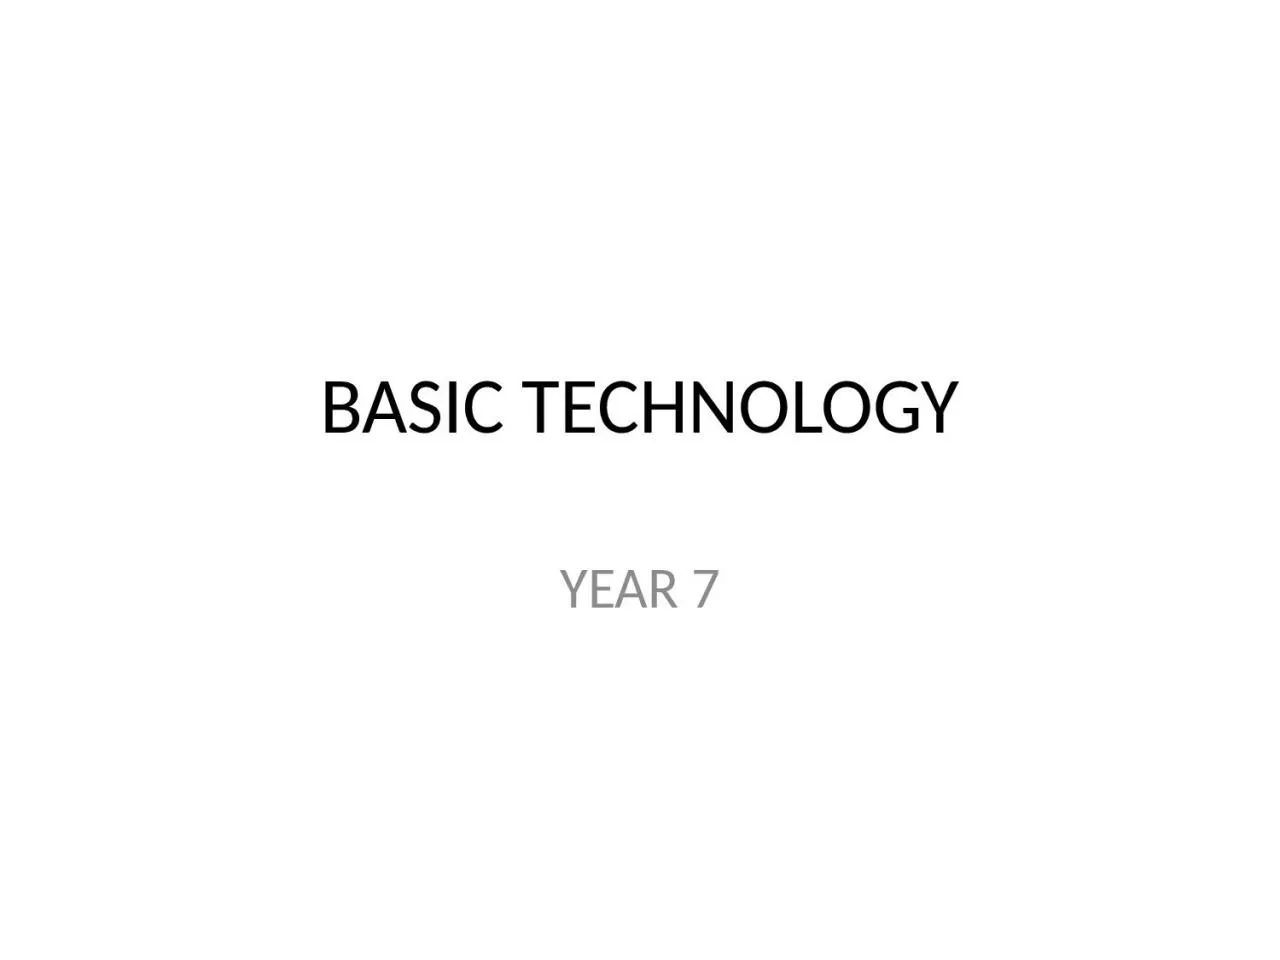 BASIC TECHNOLOGY YEAR 7 Lesson Objectives